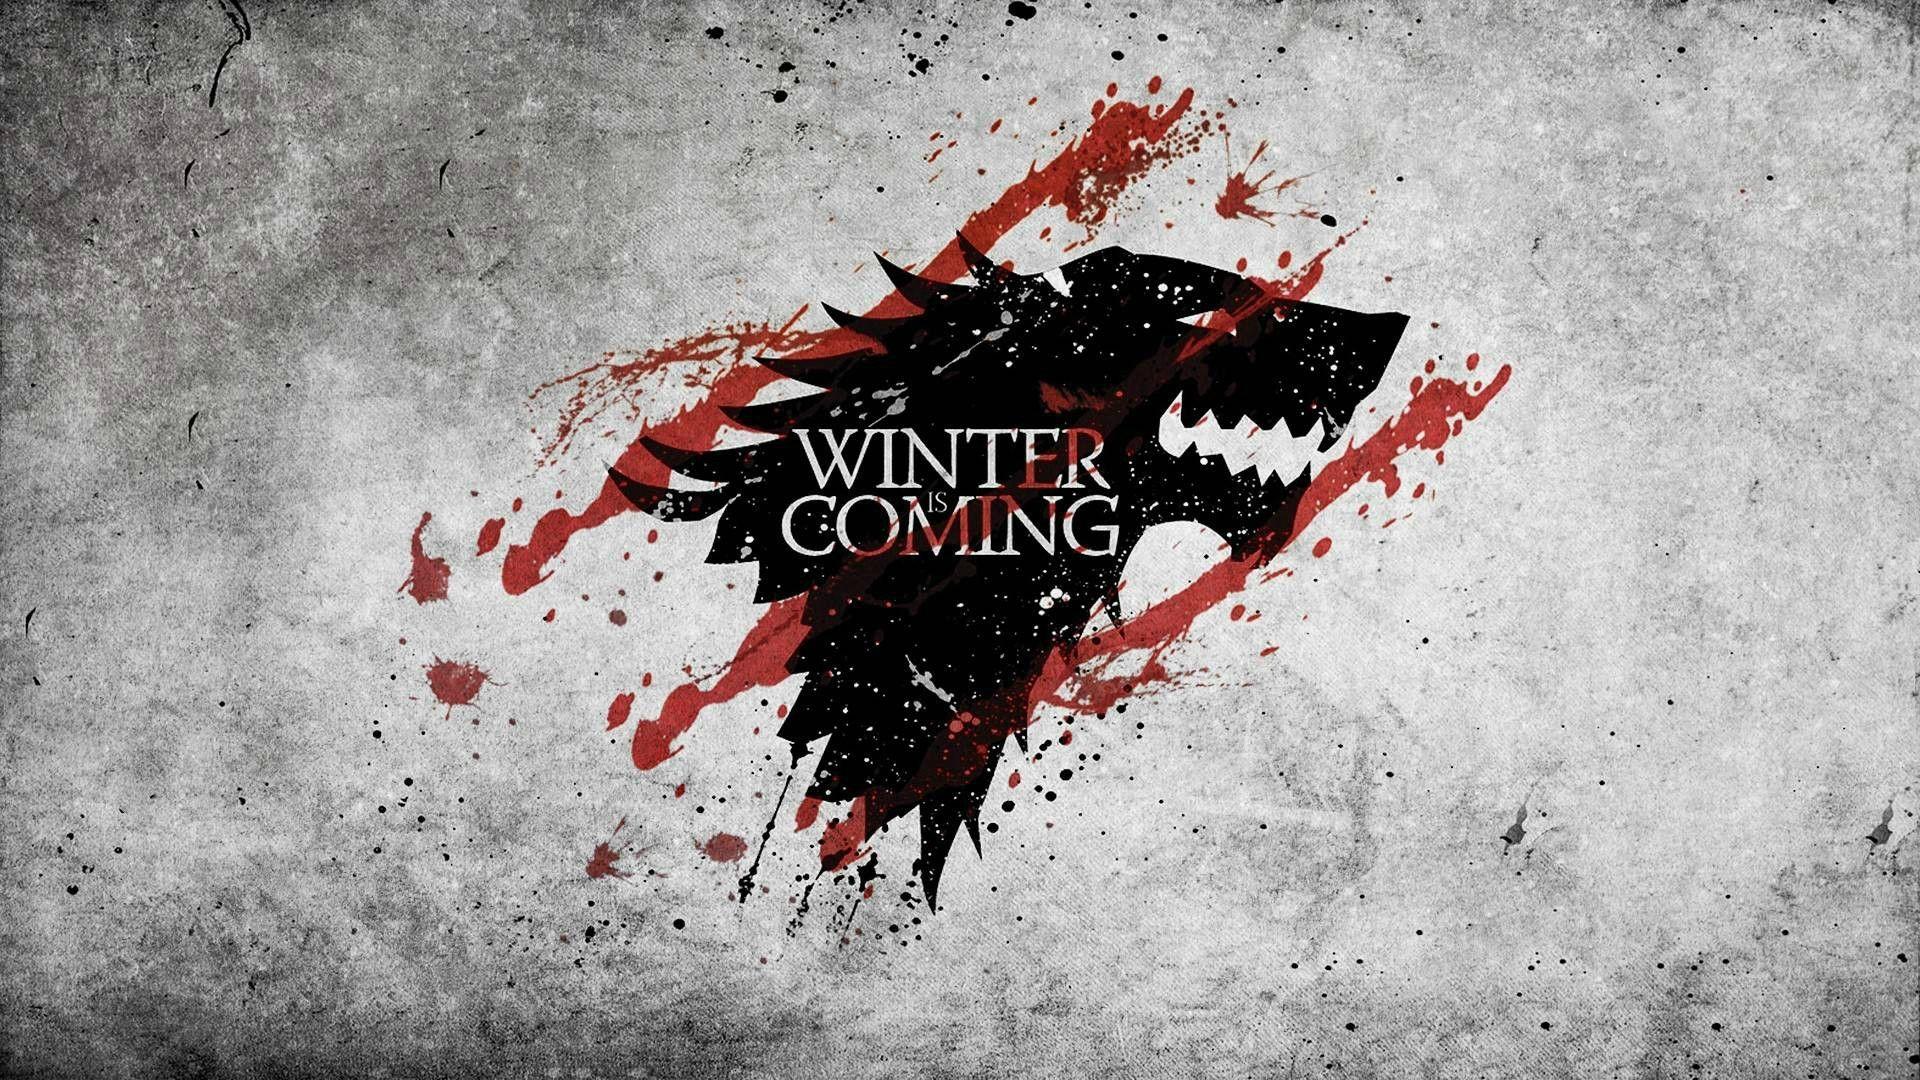 Game of Thrones House Stark Wallpaper. Winter is